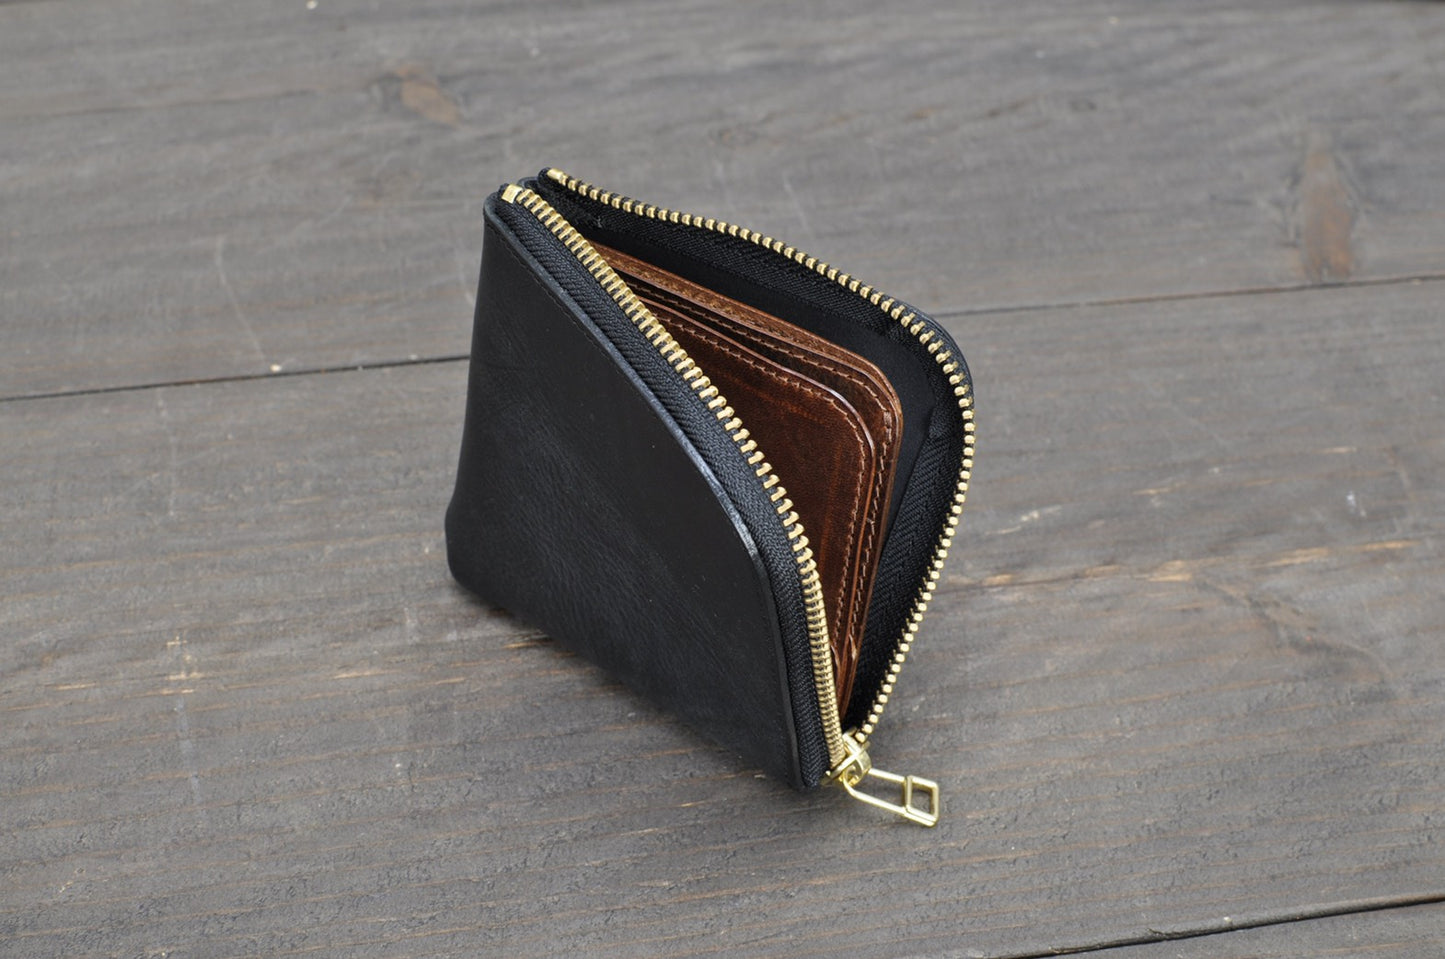 Detachable wallet